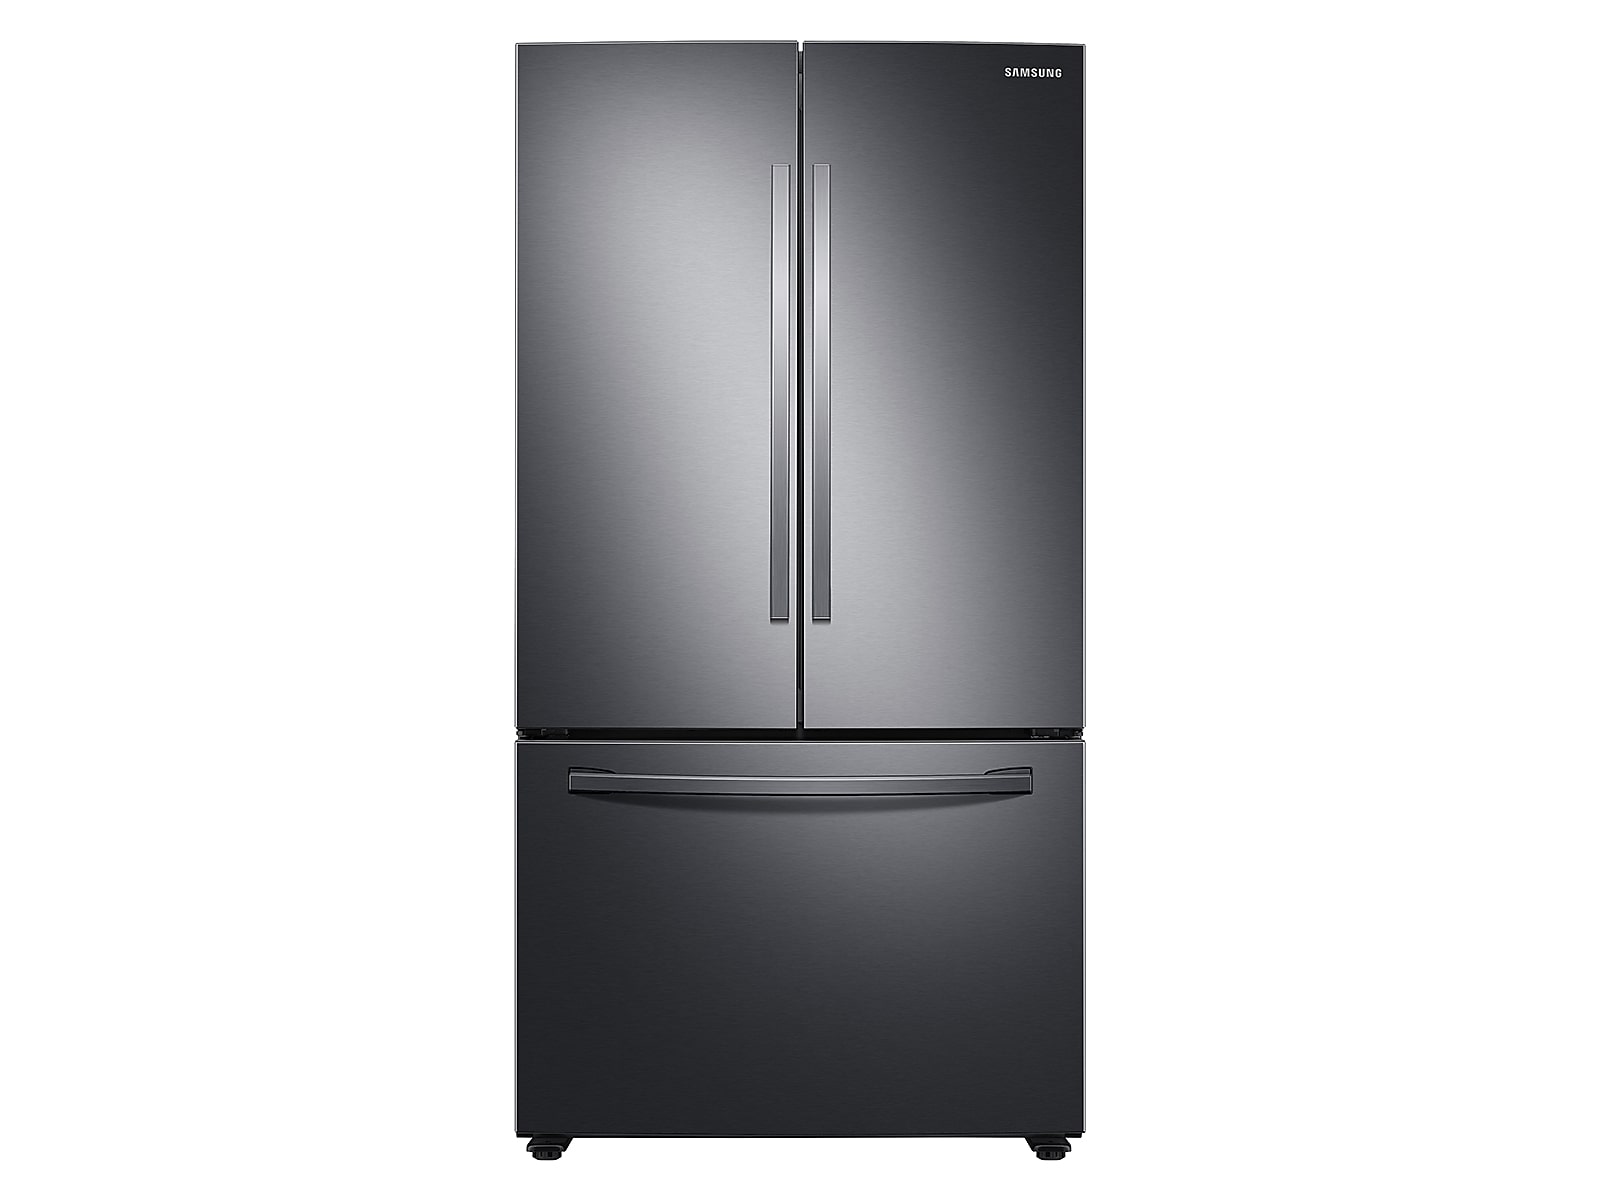 Samsung 28 cu. ft. Large Capacity 3-Door French Door Refrigerator in Black Stainless Steel(RF28T5001SG/AA)